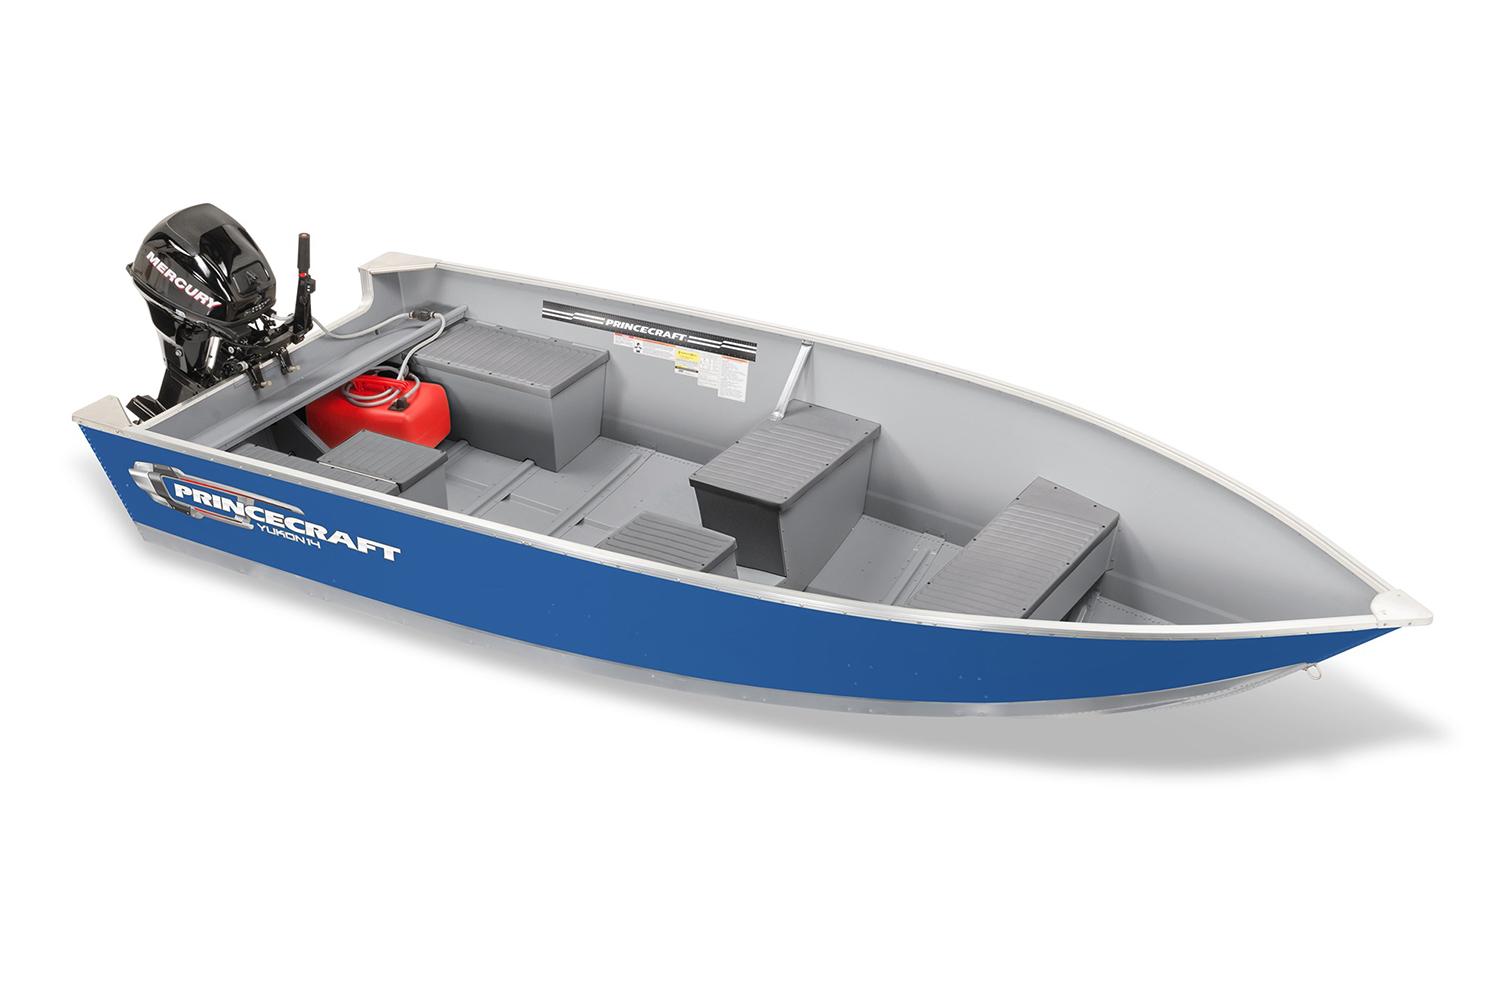 Explore Tracker Guide V 14 Boats For Sale - Boat Trader